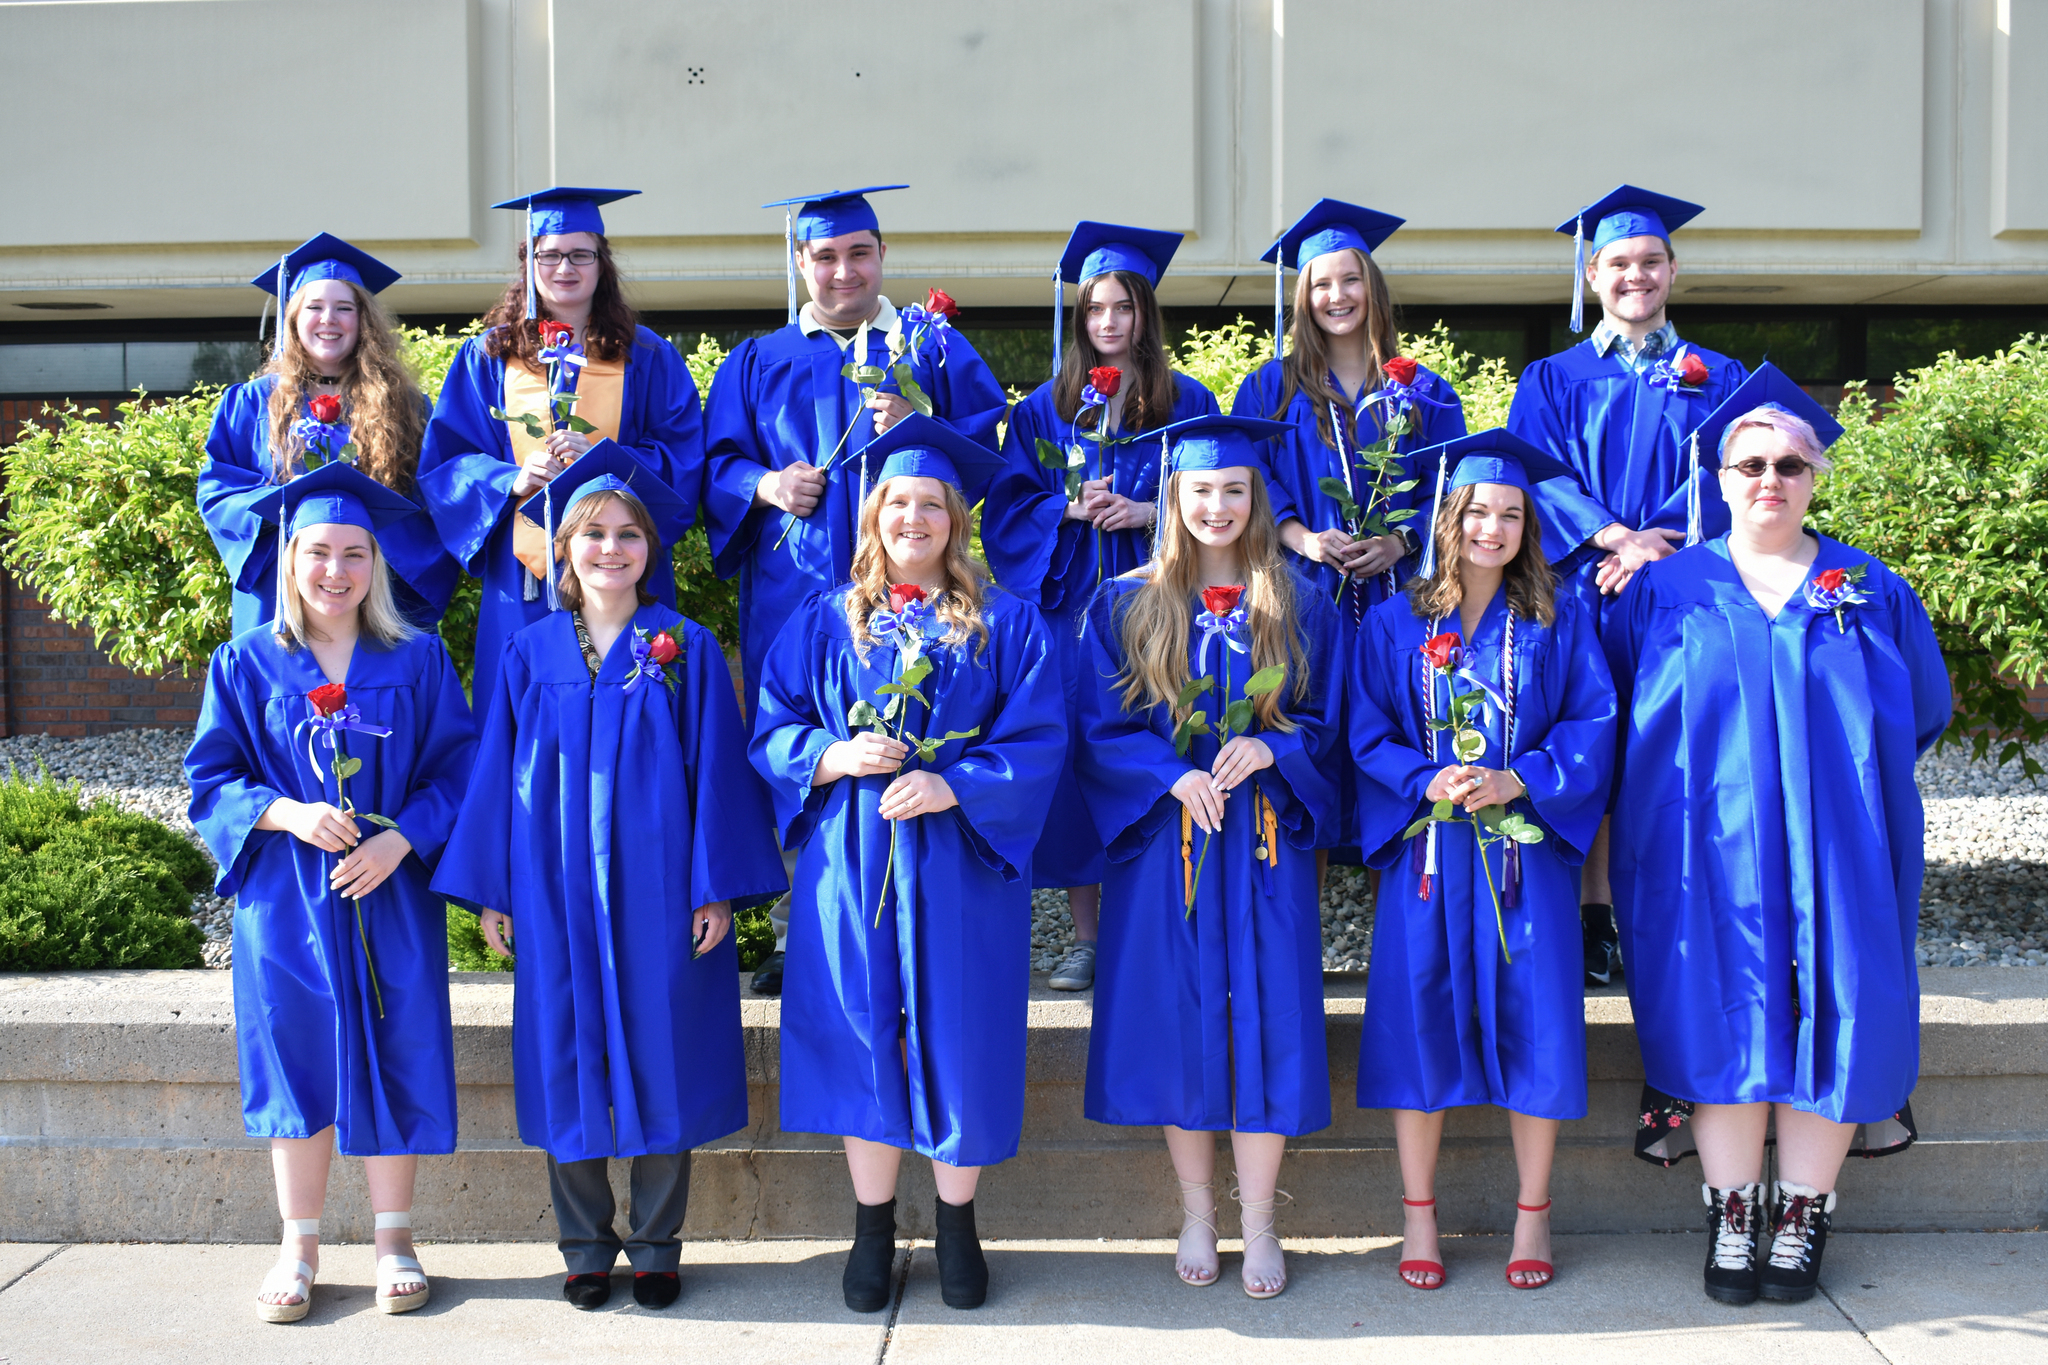 Students posing in graduation attire